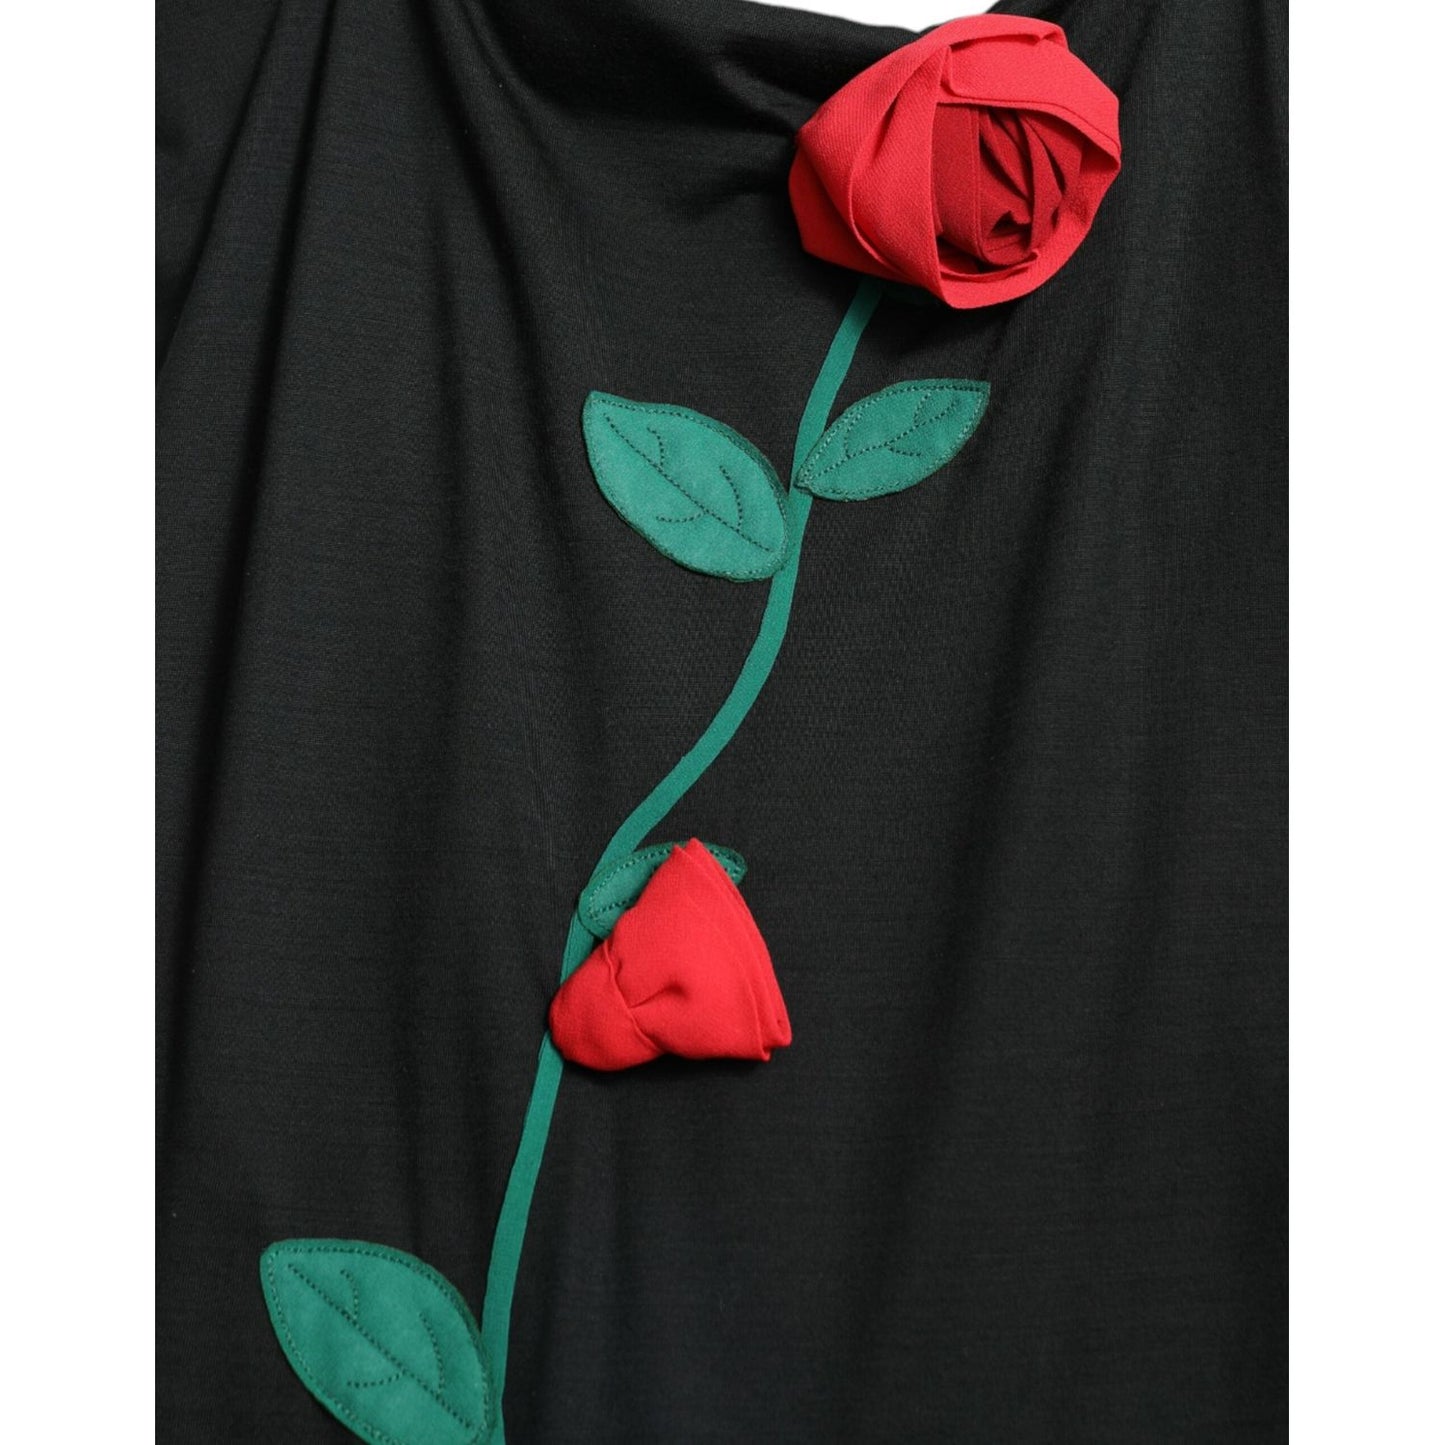 Dolce & GabbanaElegant Floral Embroidery Wool Midi DressMcRichard Designer Brands£1679.00